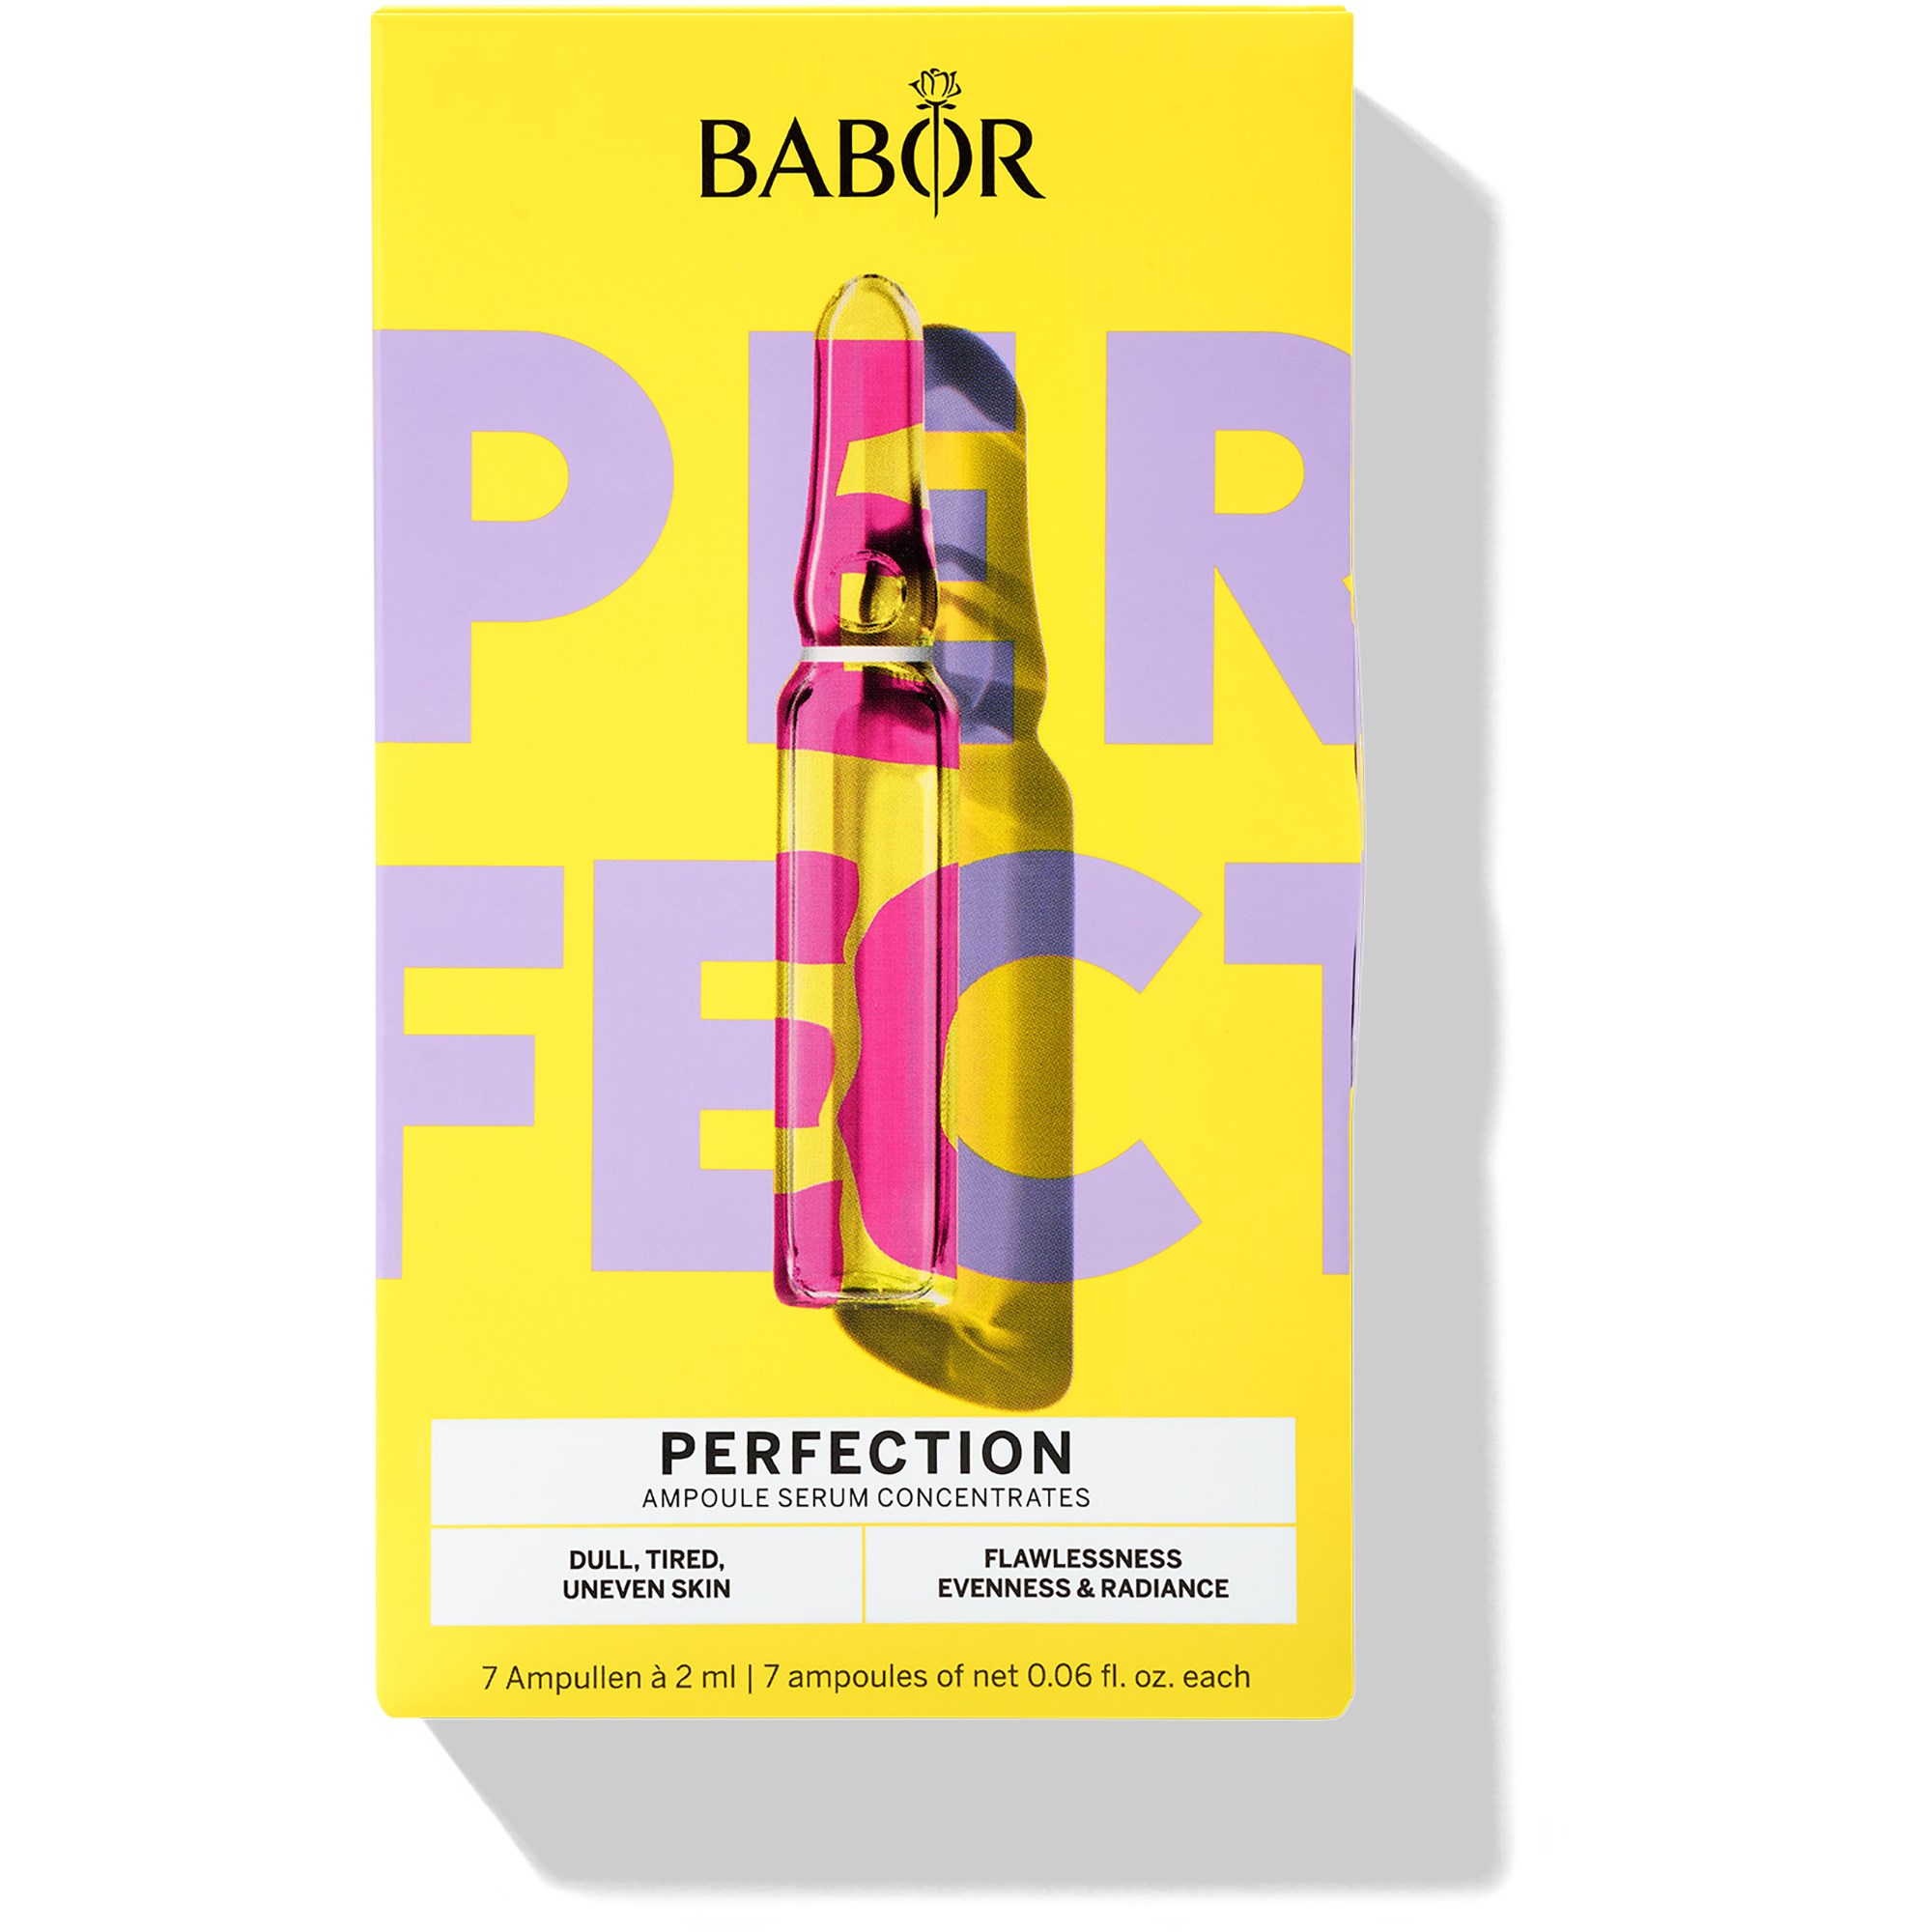 BABOR Ampoule Concentrates Limited Edition PERFECTION Ampoule Set